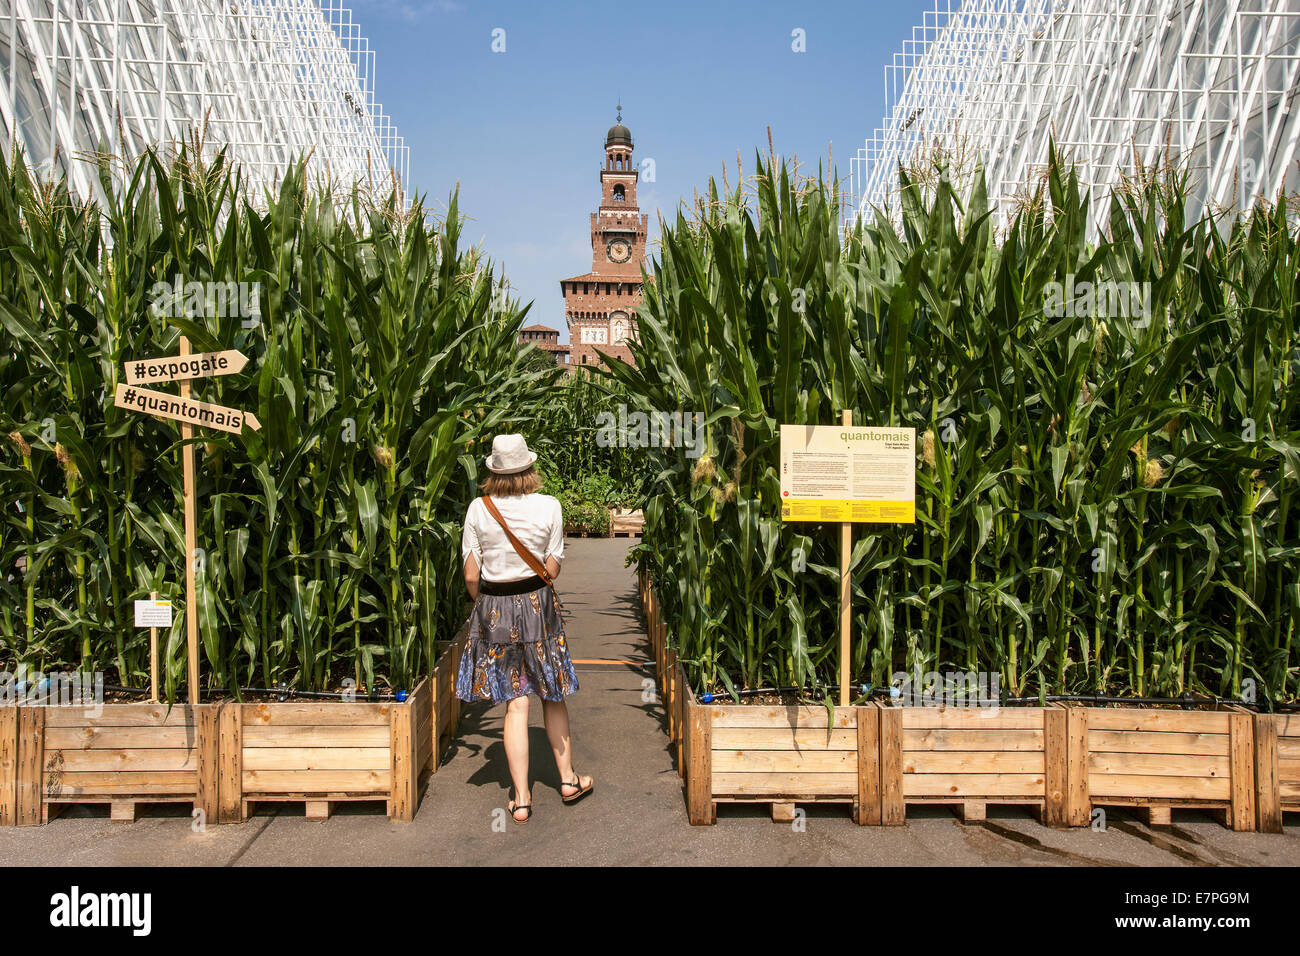 Milán, la Expo 2015, Feria EXPOGATE, Universal, el castillo Sforzesco, city gate, Infopoint, signpost, maíz parterres, mujer, Italia Foto de stock